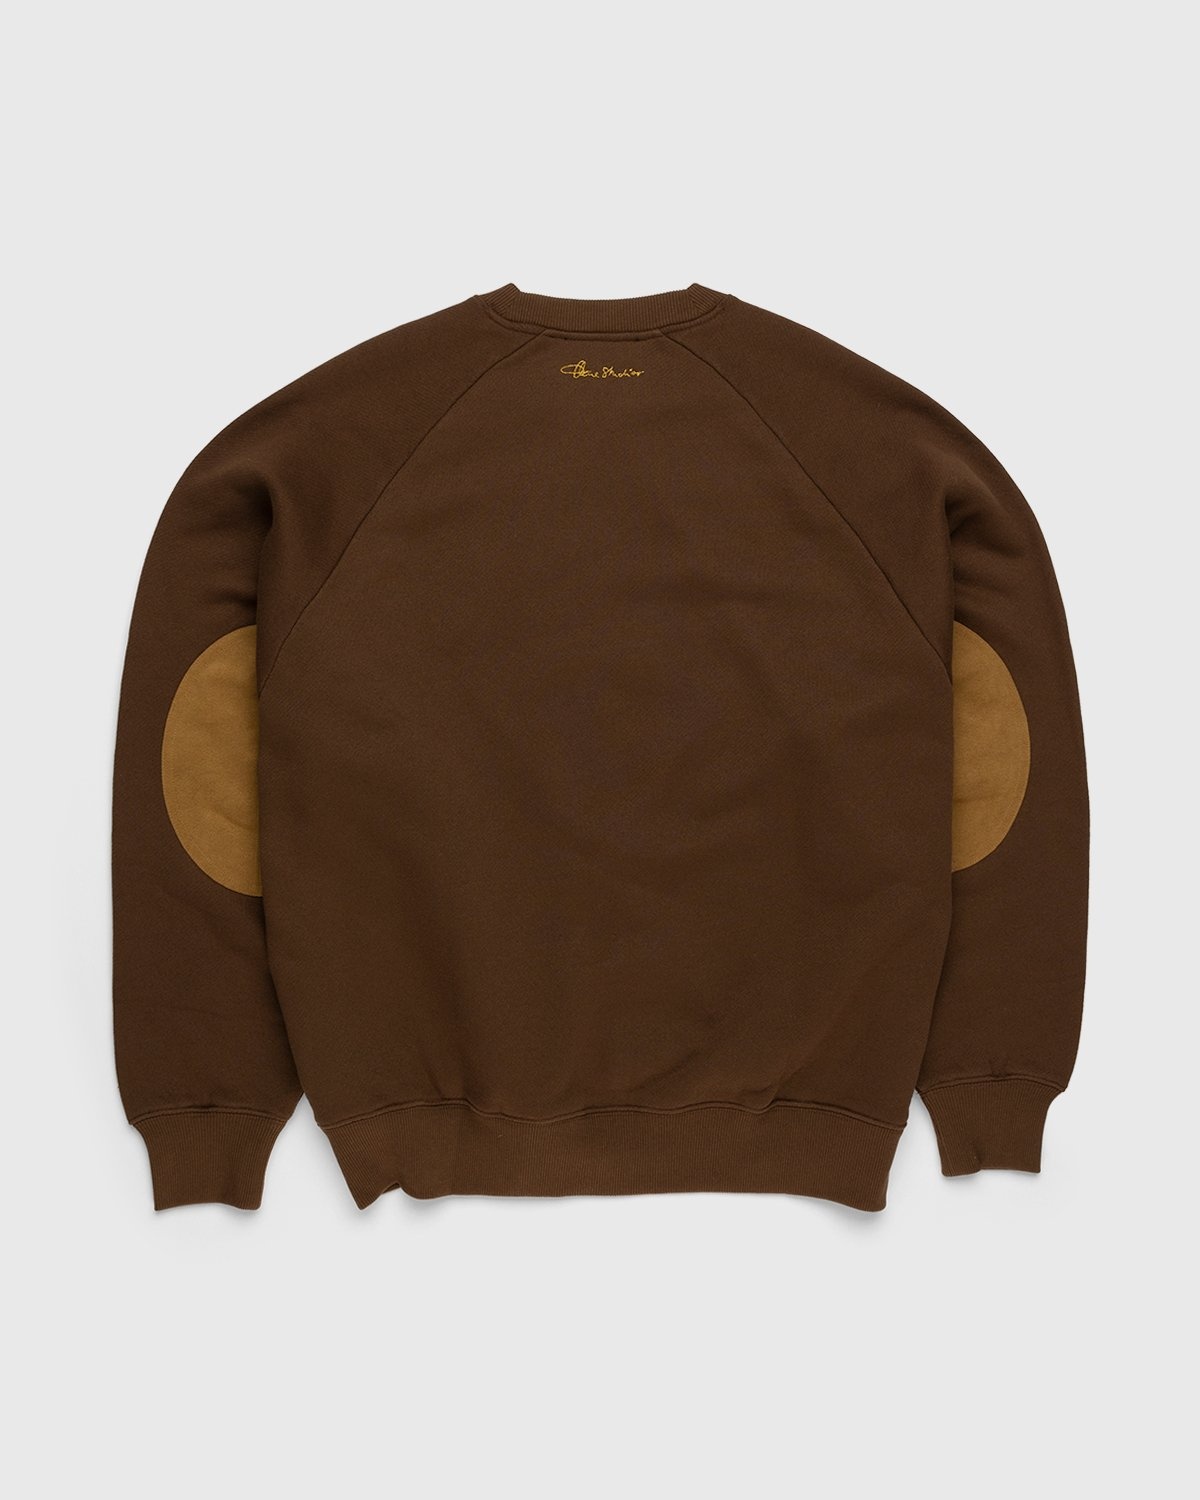 Acne Studios – Sweater Brown - Sweatshirts - Brown - Image 2